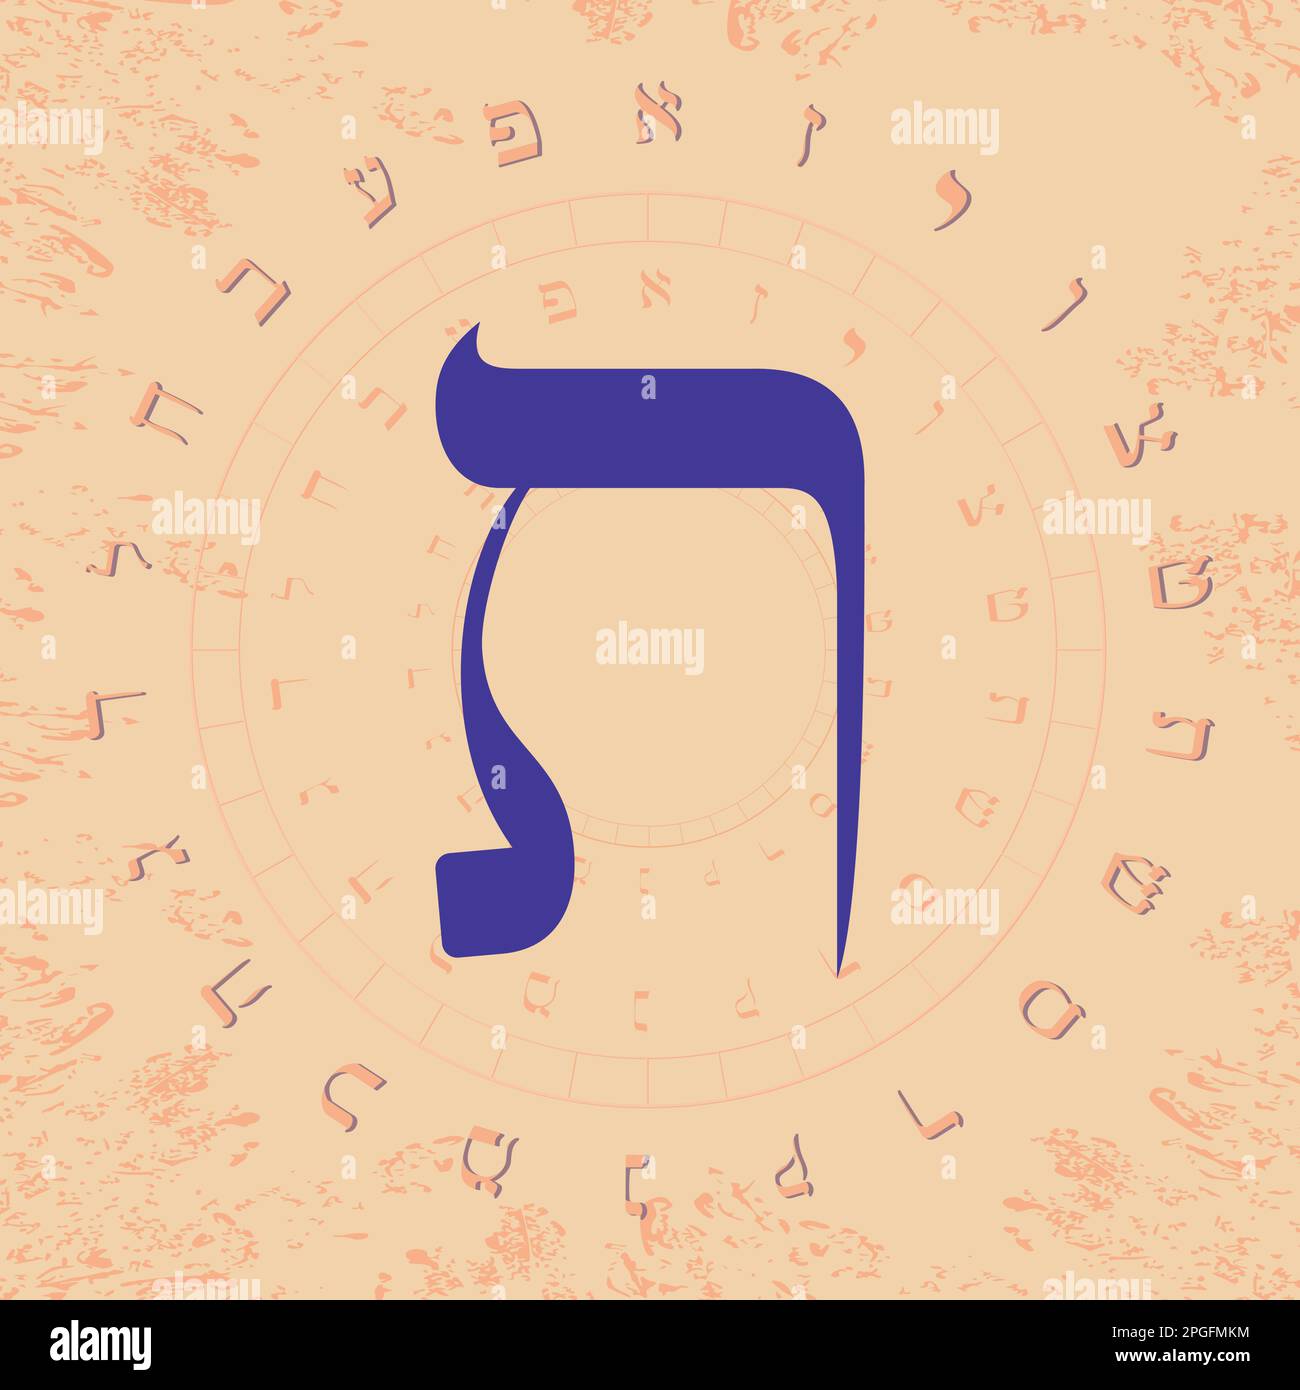 Vector illustration of the Hebrew alphabet in circular design. Hebrew letter called Tau large and reddish orange. Stock Vector